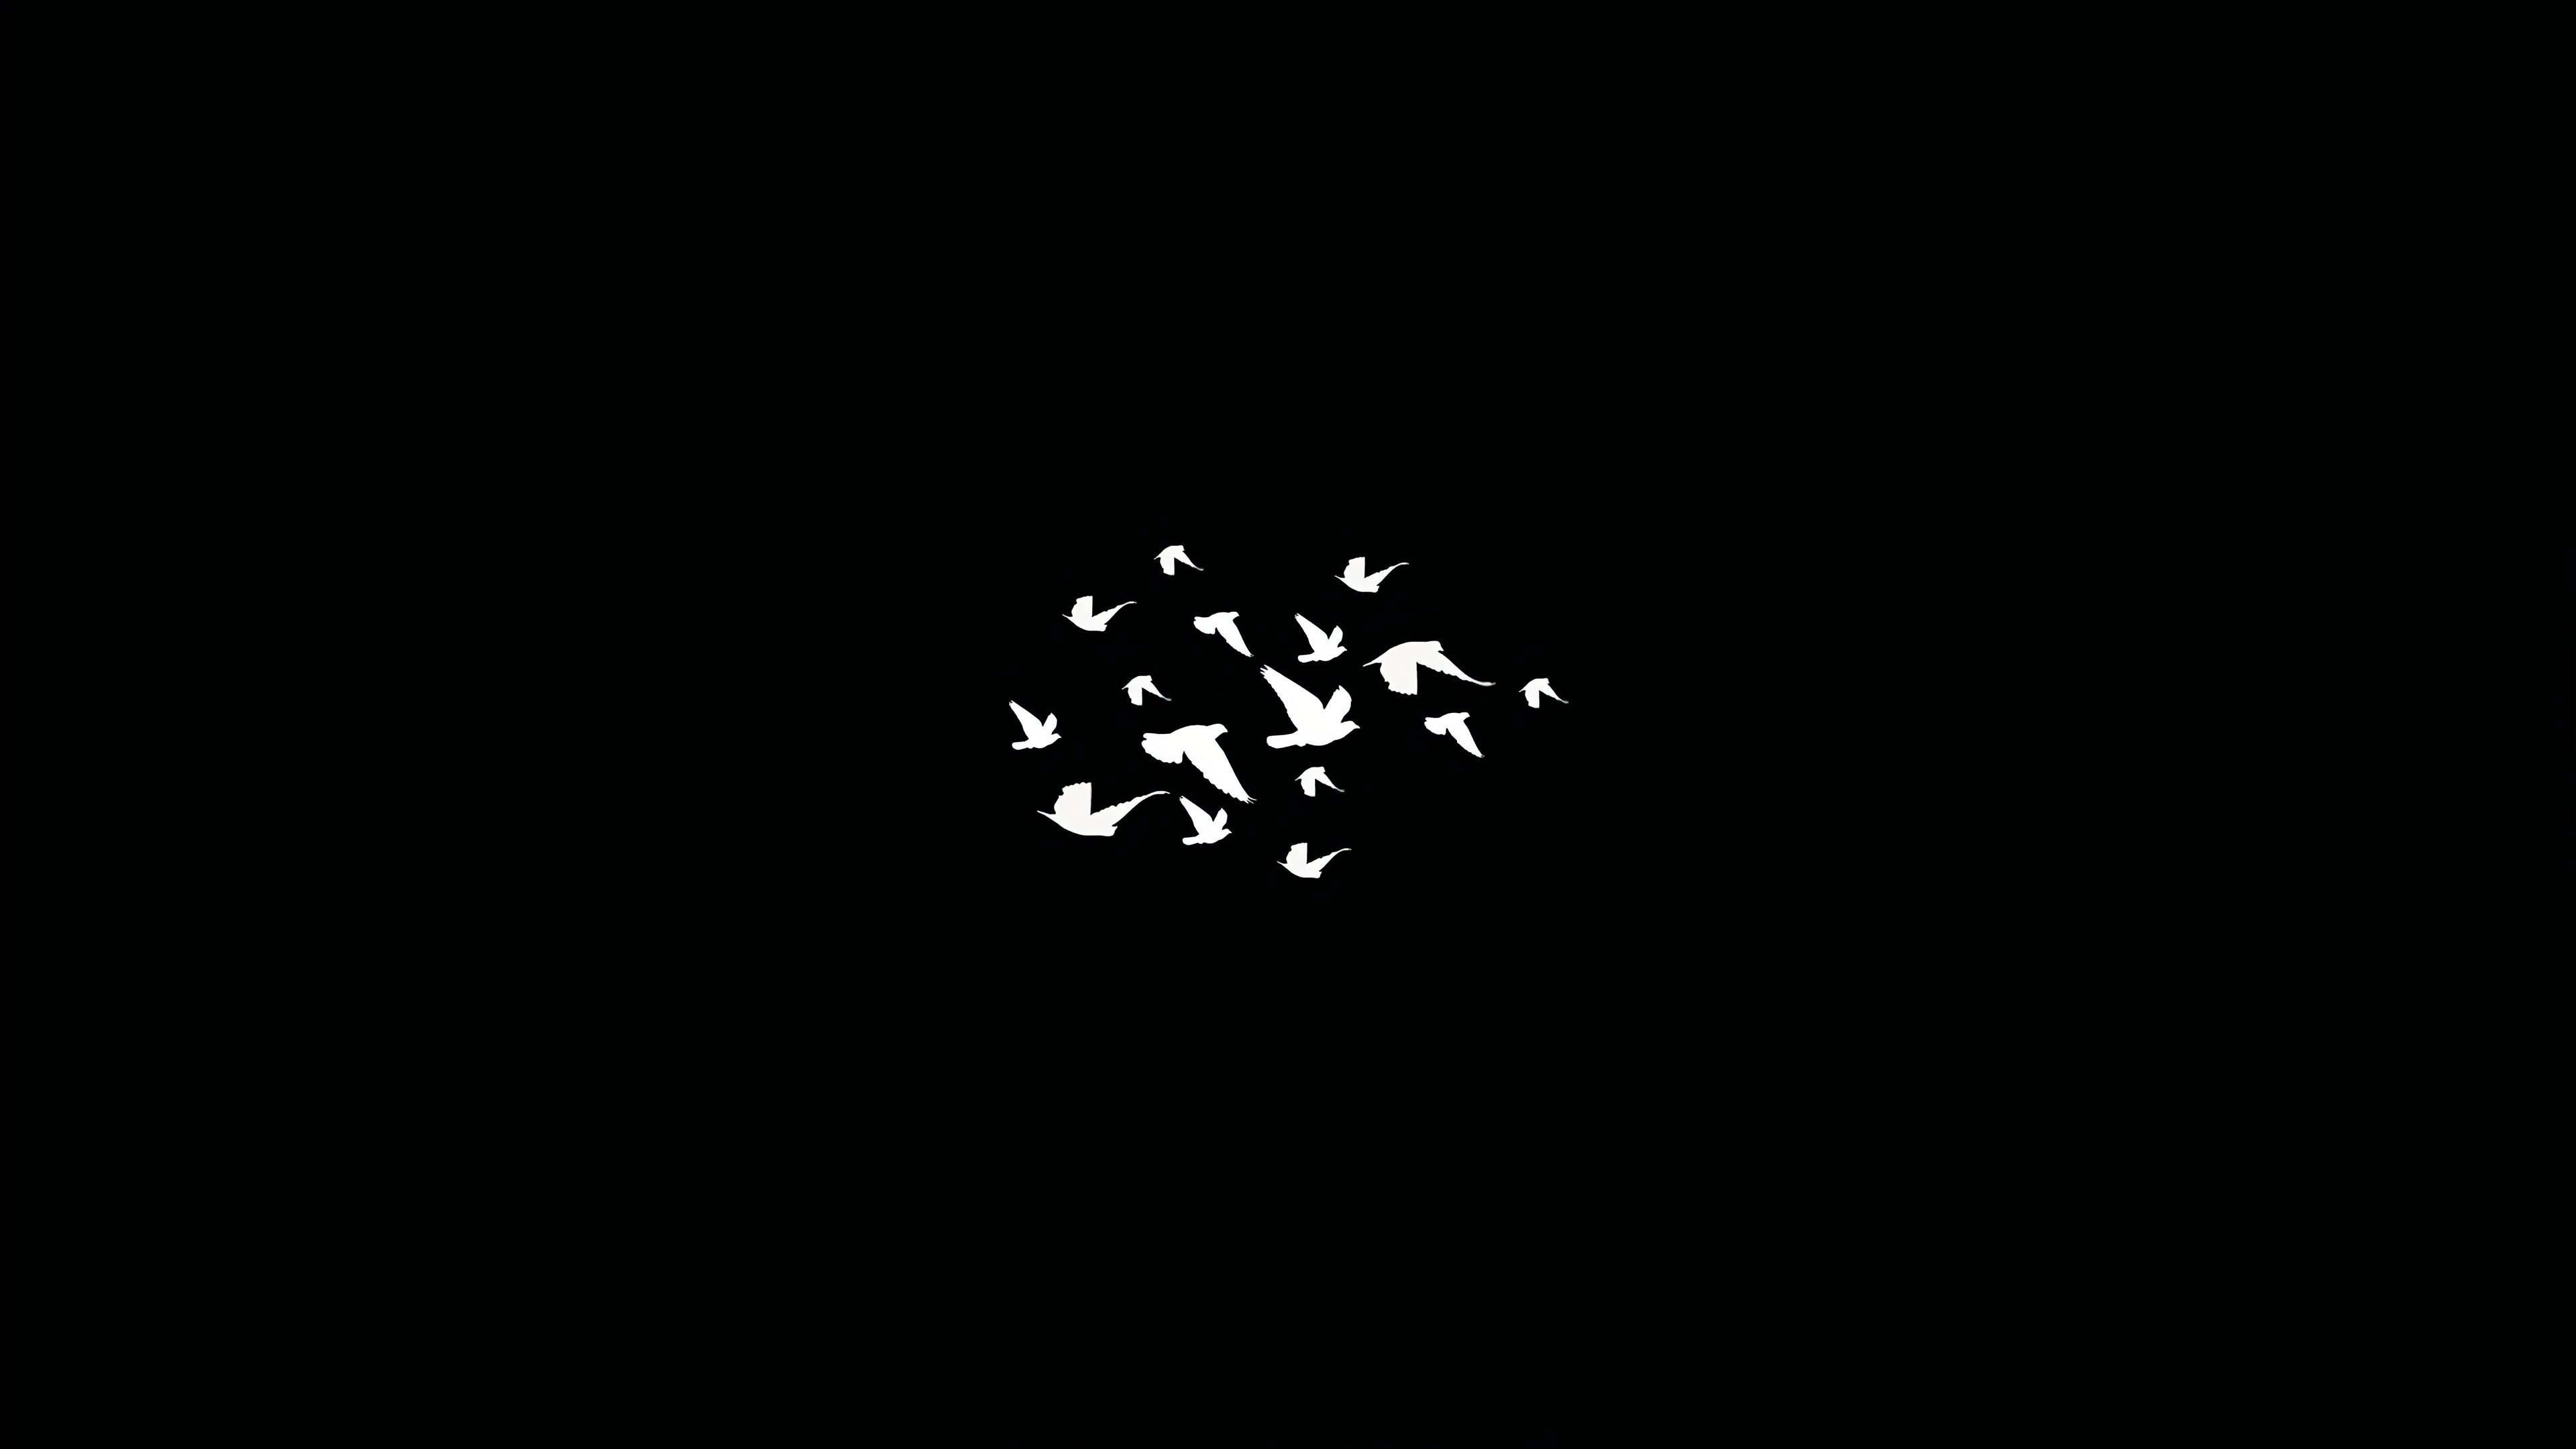 Birds Flying Minimalist Dark 4k, HD Artist, 4k Wallpaper, Image, Background, Photo and Picture